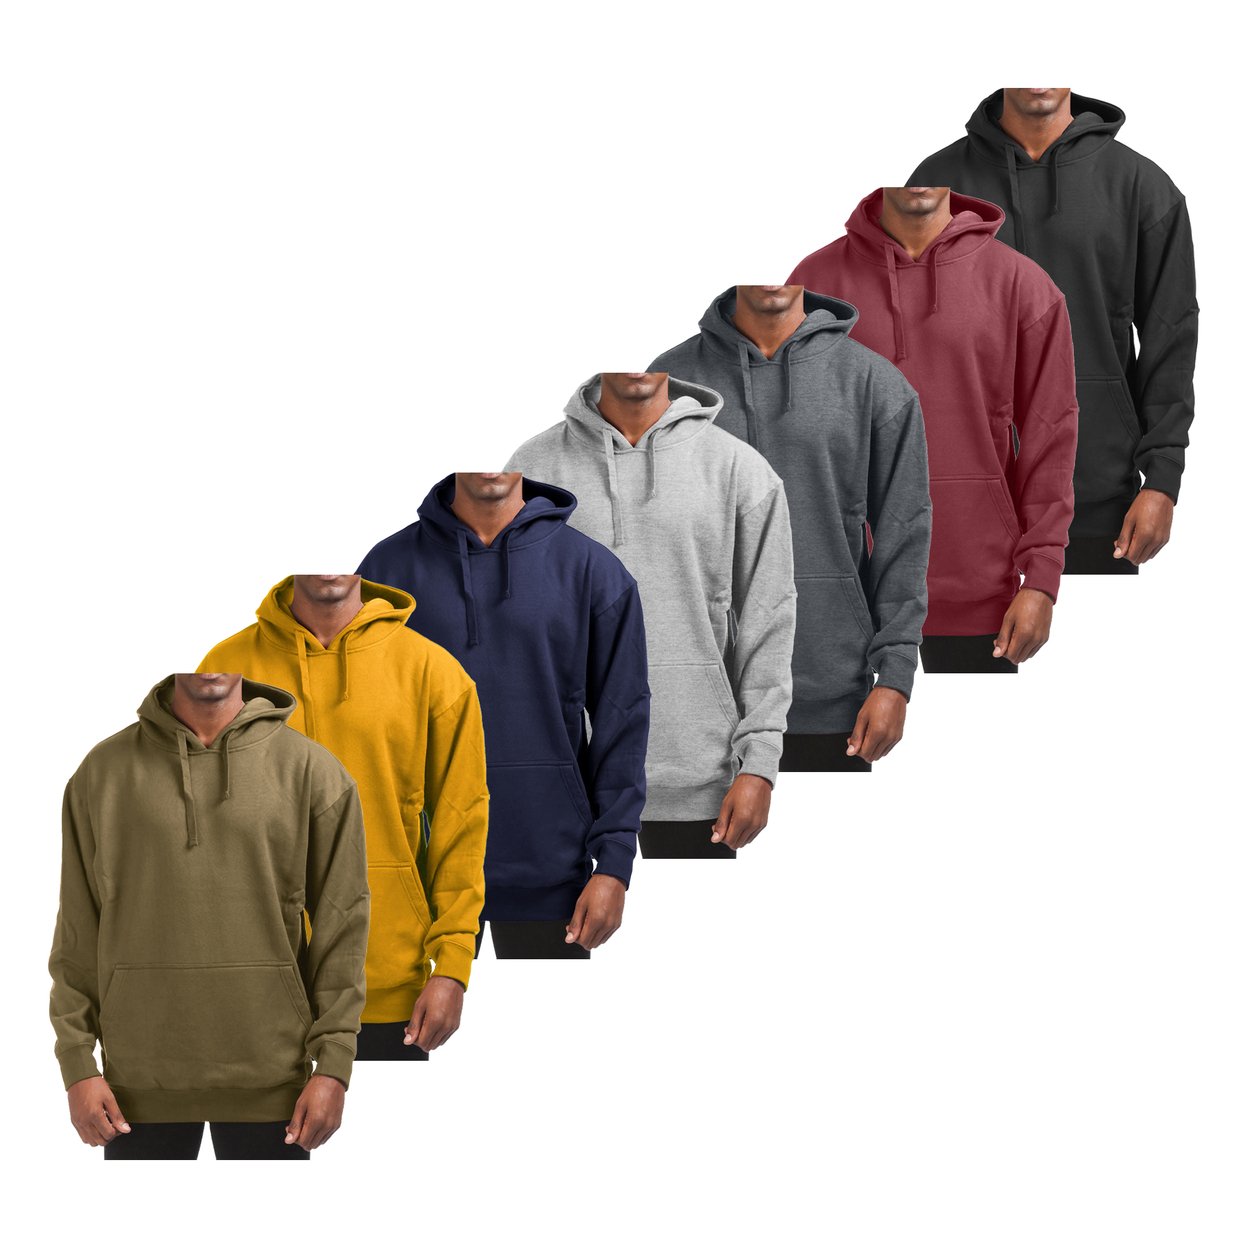 2-Pack: Men's Super-Soft Winter Warm Cotton-Blend Fleece Pullover Hoodie With Kangaroo Pocket - Black & Charcoal, Xx-large